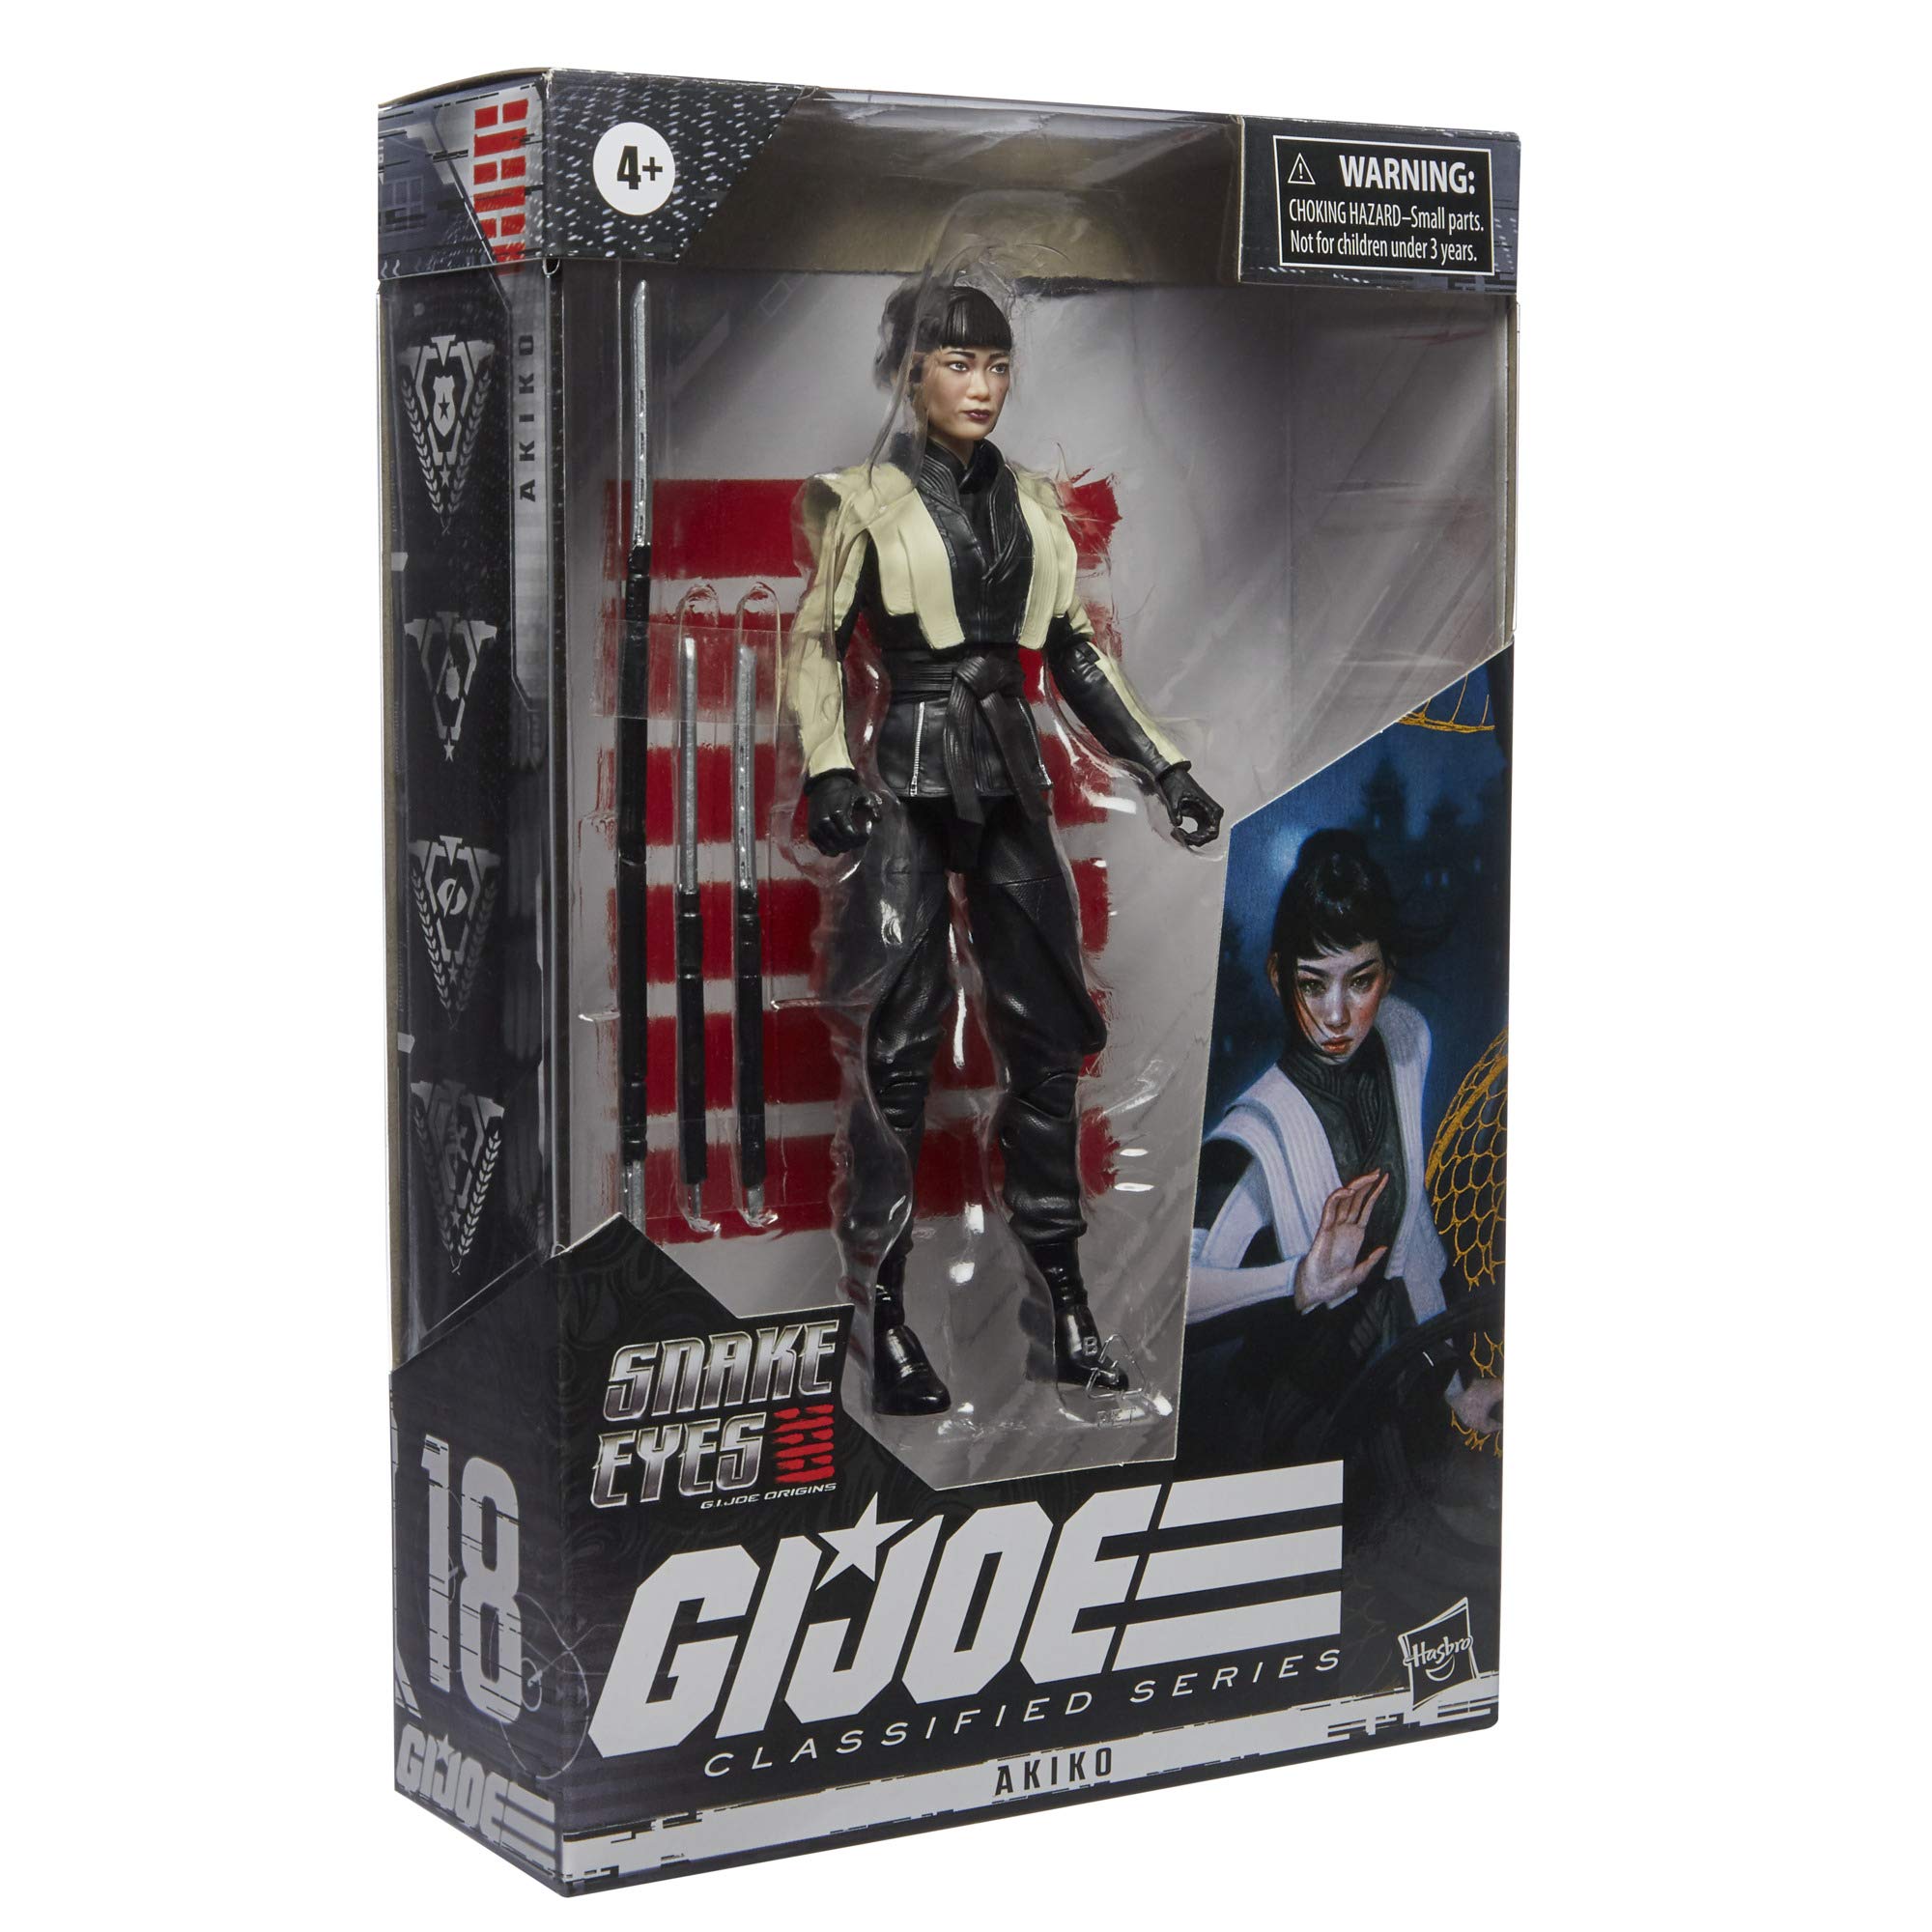 G.I. Joe Classified Series Snake Eyes: G.I. Joe Origins Akiko Collectible Action Figure 18, Premium 6-Inch Scale Toy with Custom Package Art